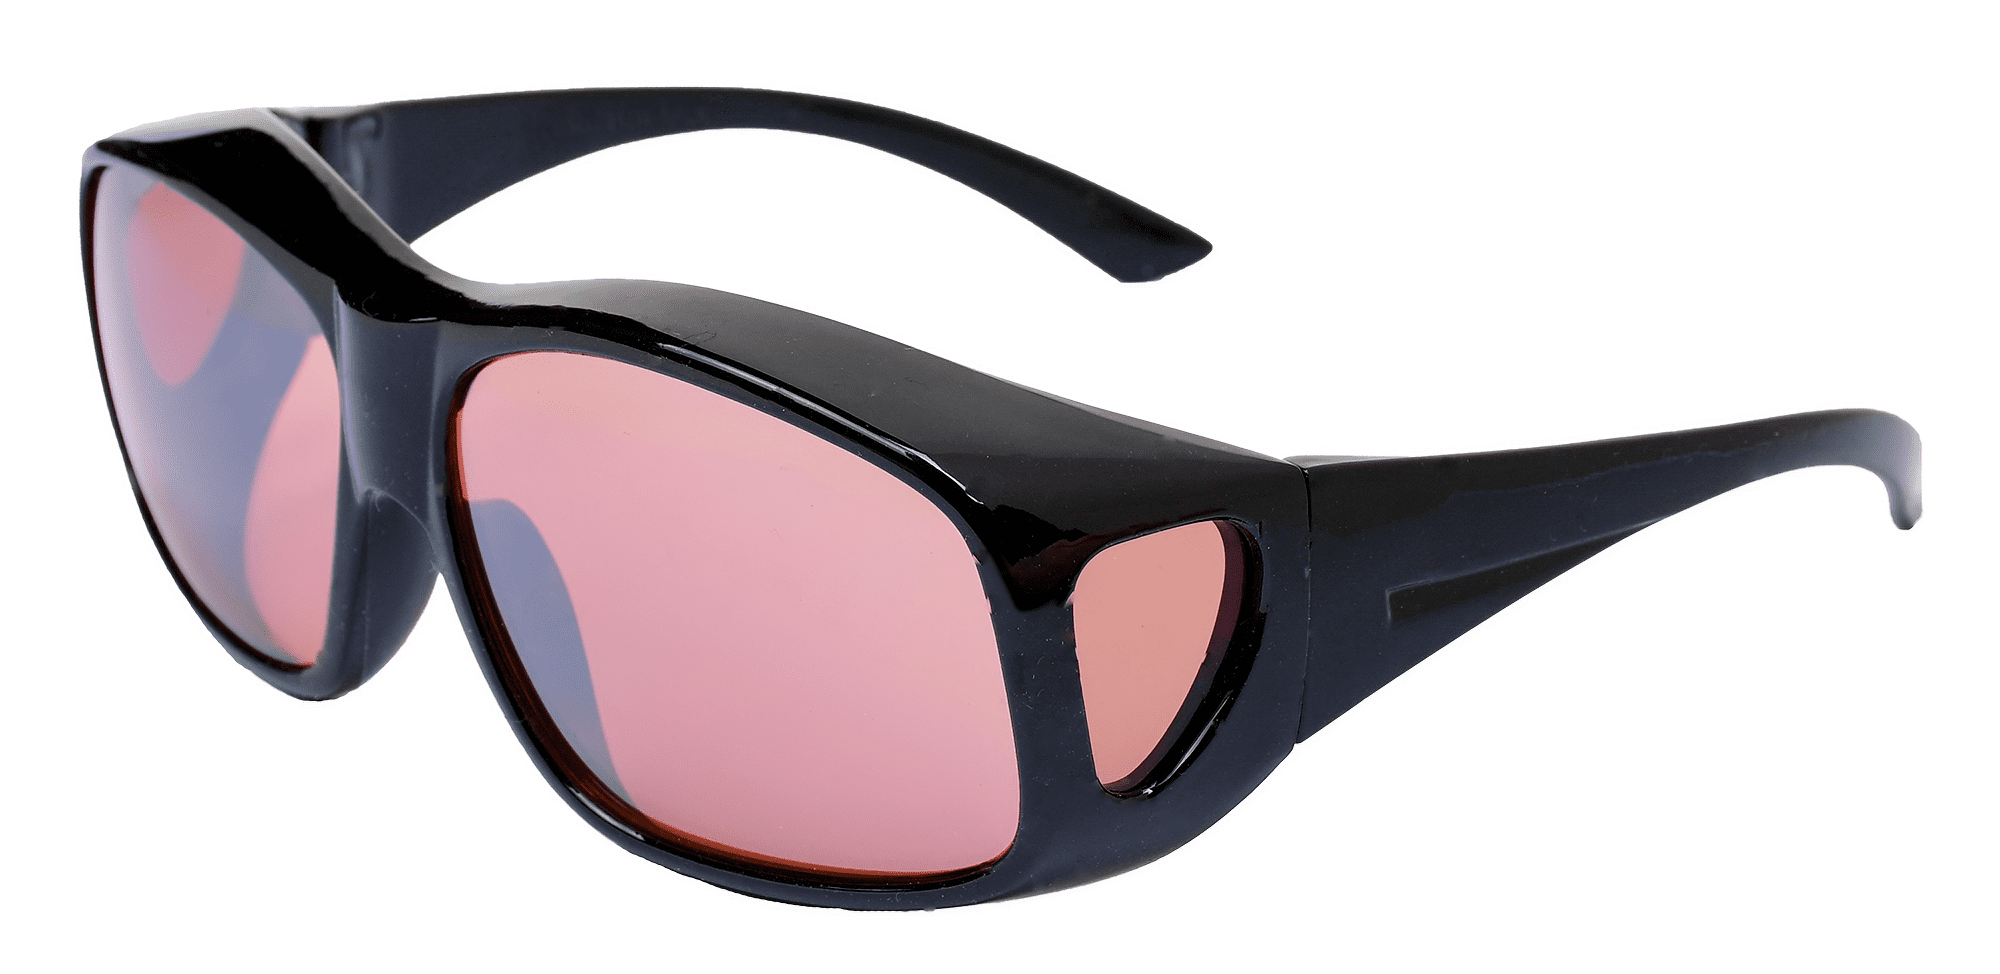 6 LARGE DRIVING GLASSES COBRA BLUE BLOCKERS #251 new sunglasses uv protection 